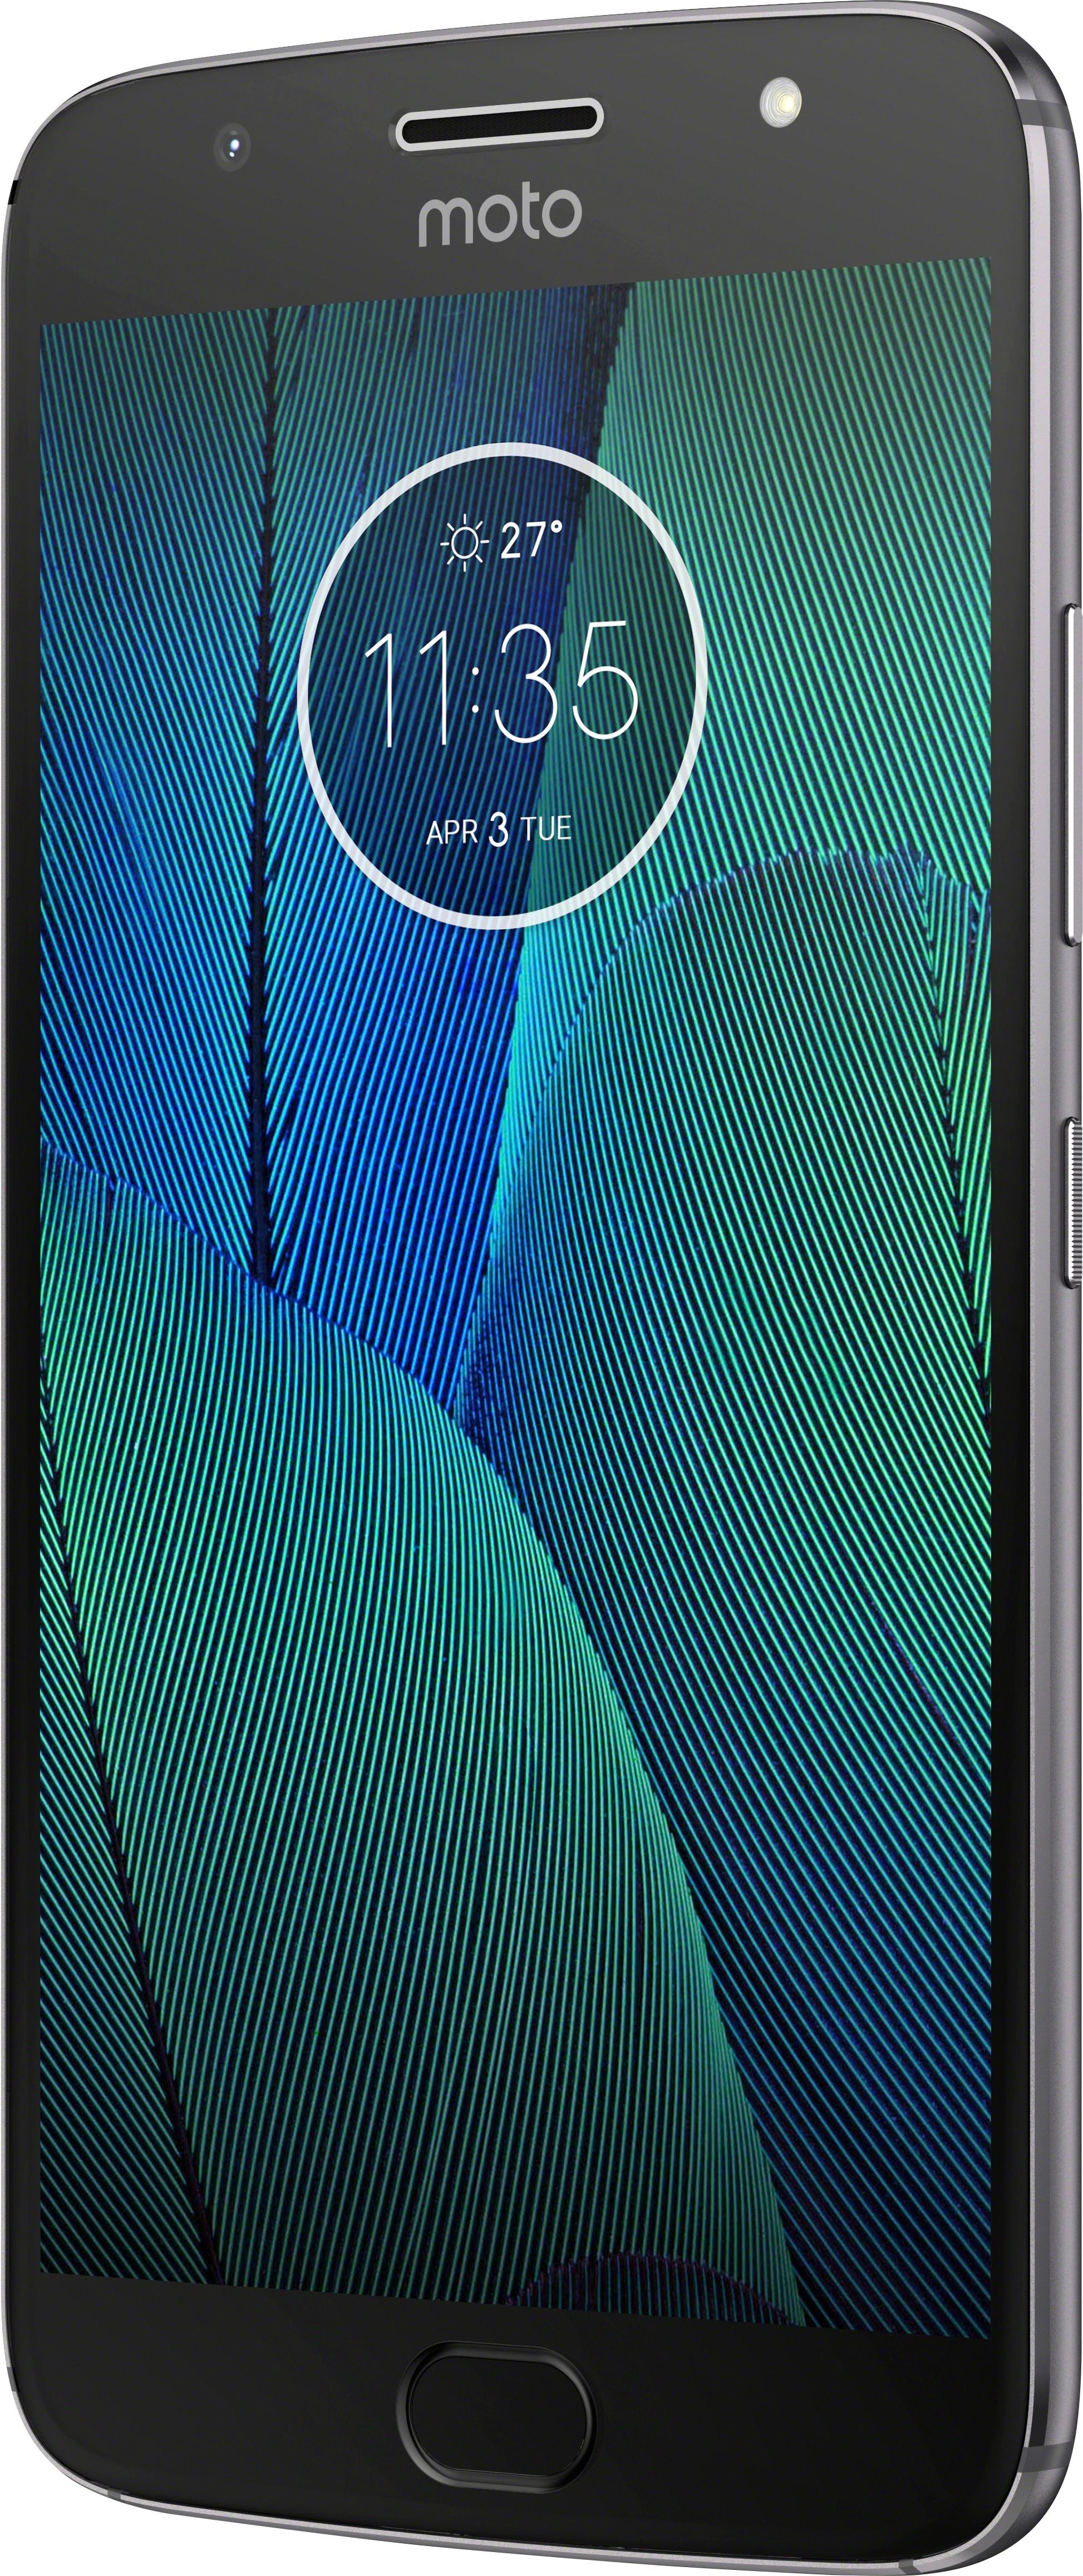 Best Buy: Motorola Moto G5S 4G LTE with 32GB Memory Cell Phone (Unlocked) Lunar Gray PA6R0003US